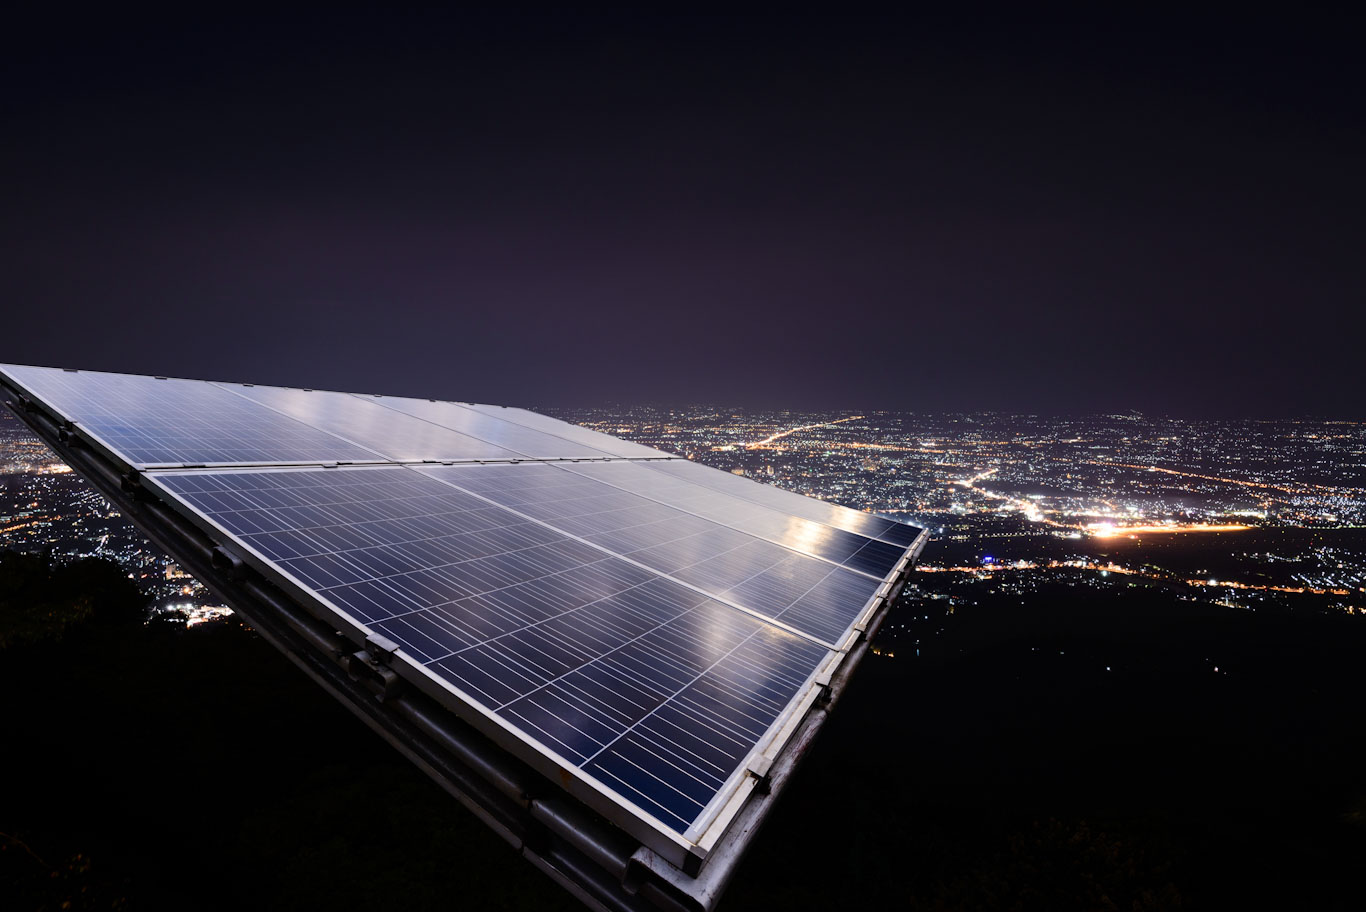 outdoor solar panels at night